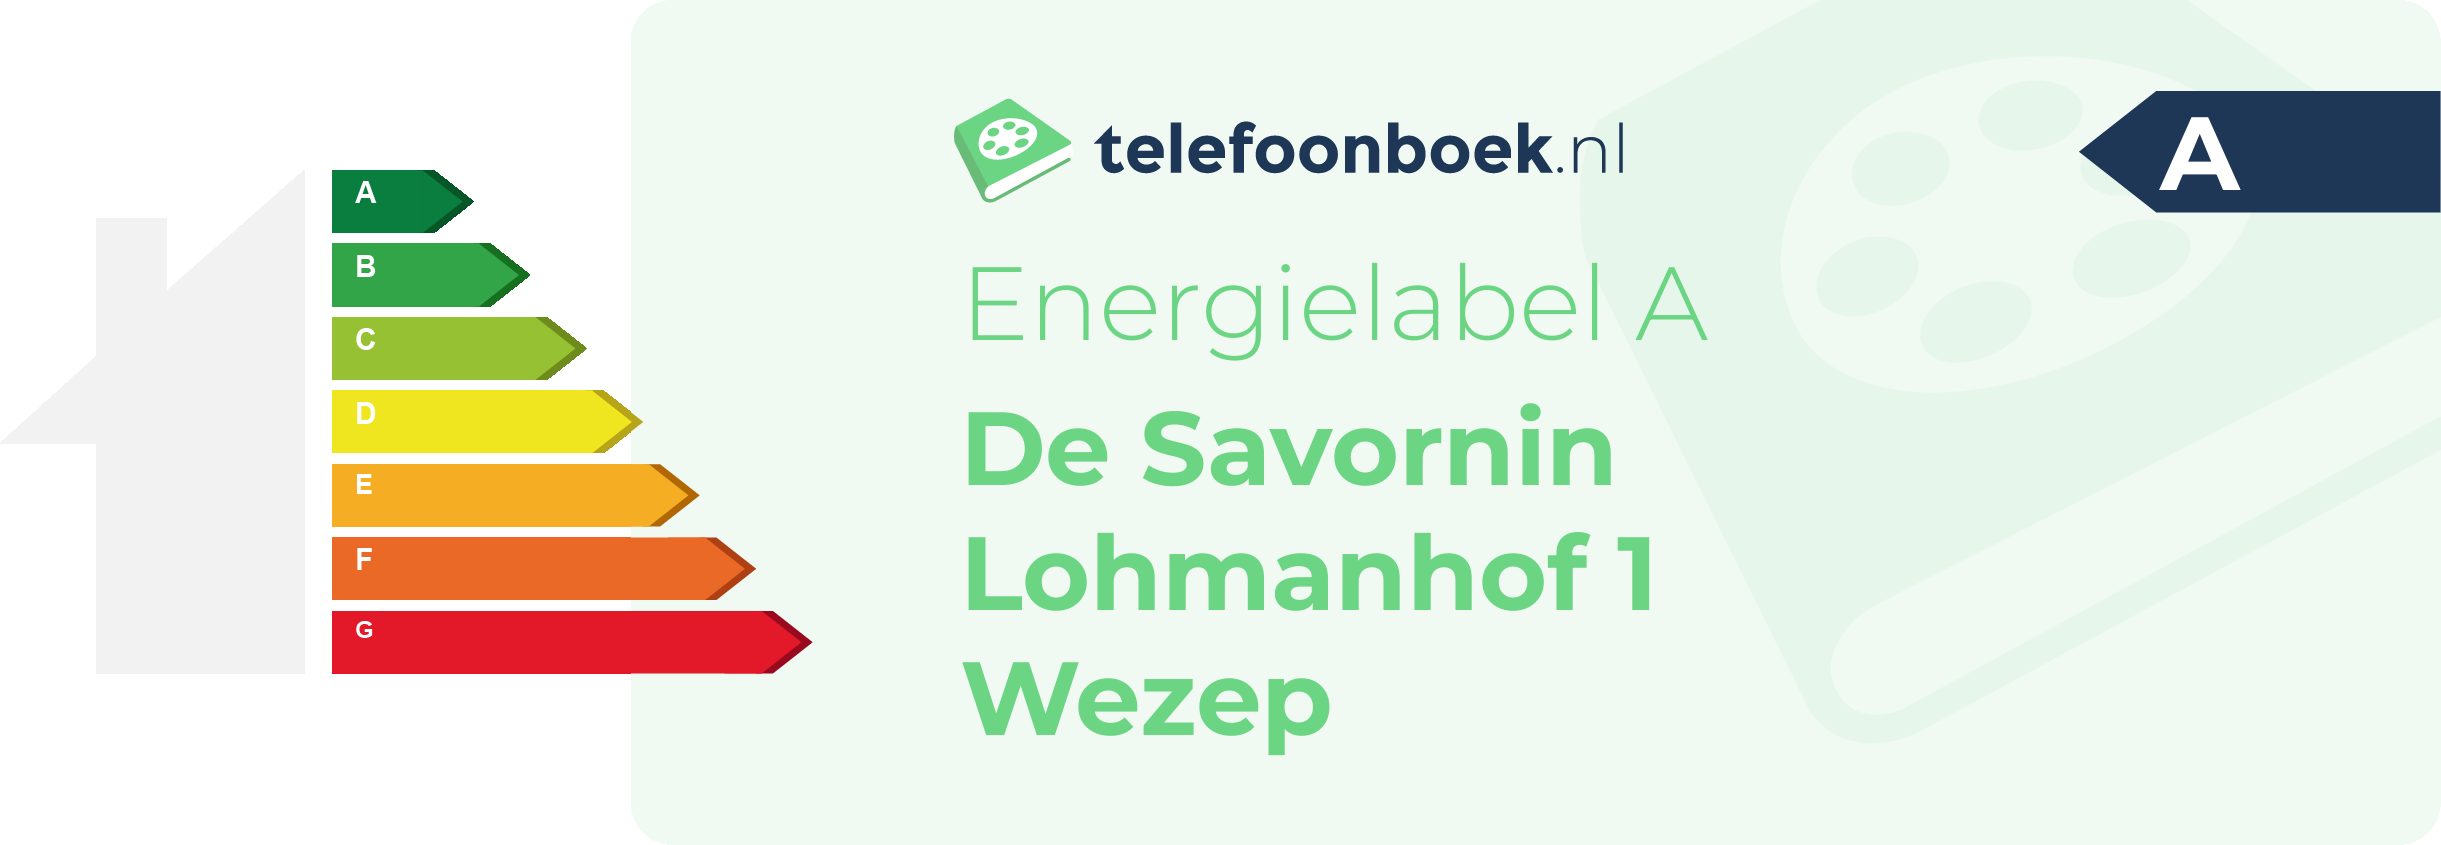 Energielabel De Savornin Lohmanhof 1 Wezep